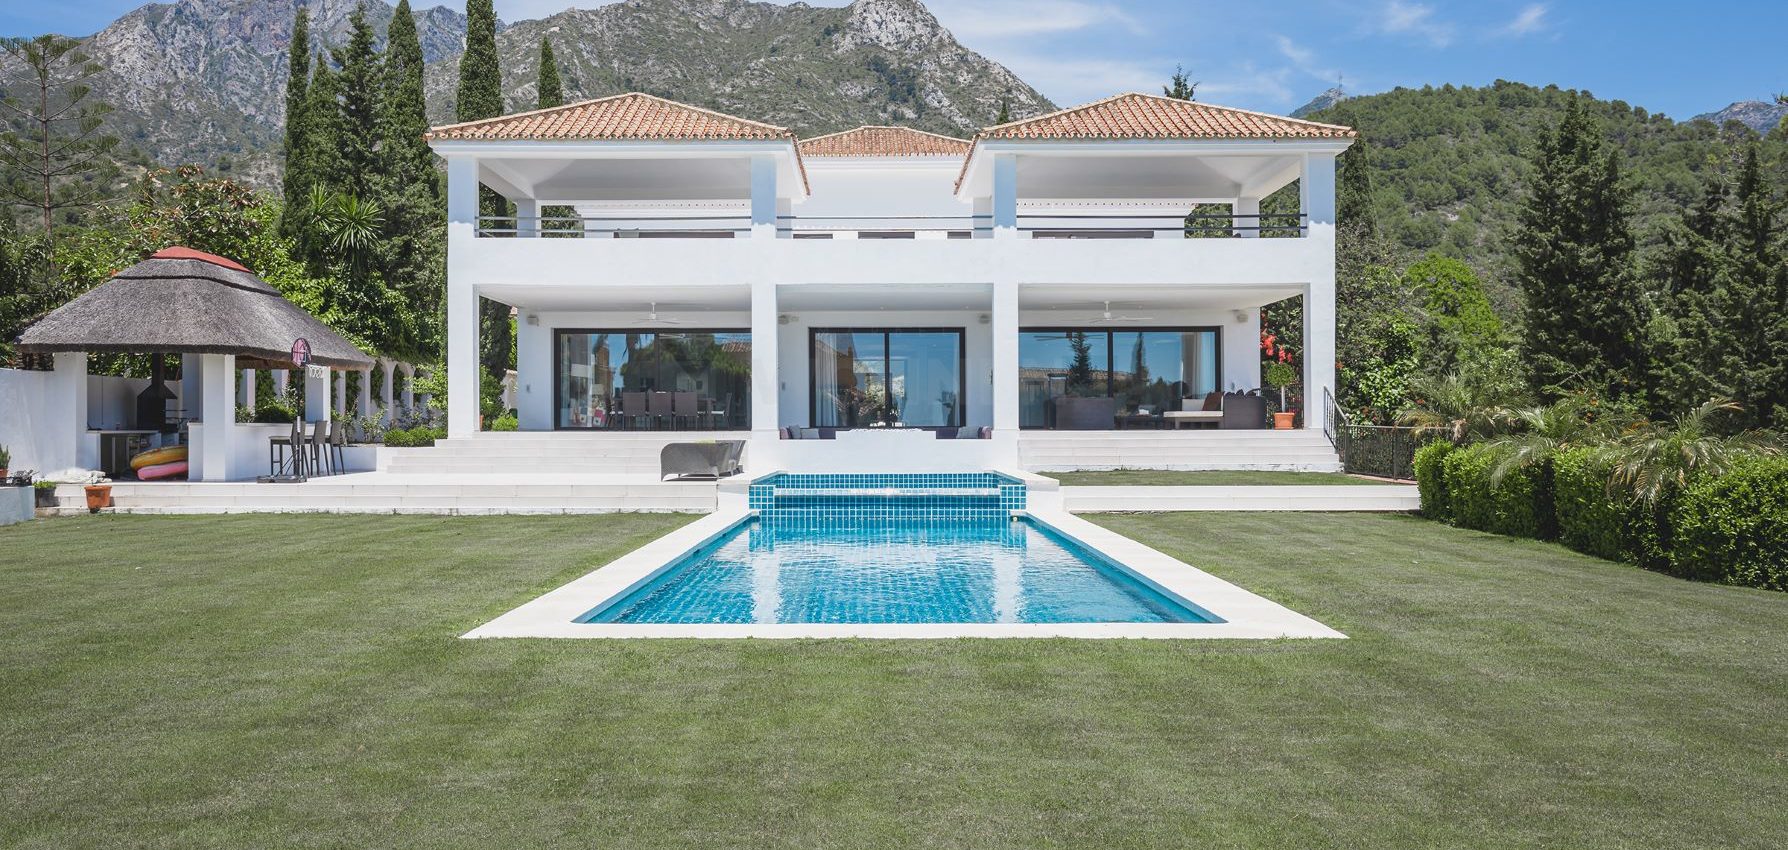 Impressive Mediterranean style villa with views over the Mediterranean Sea